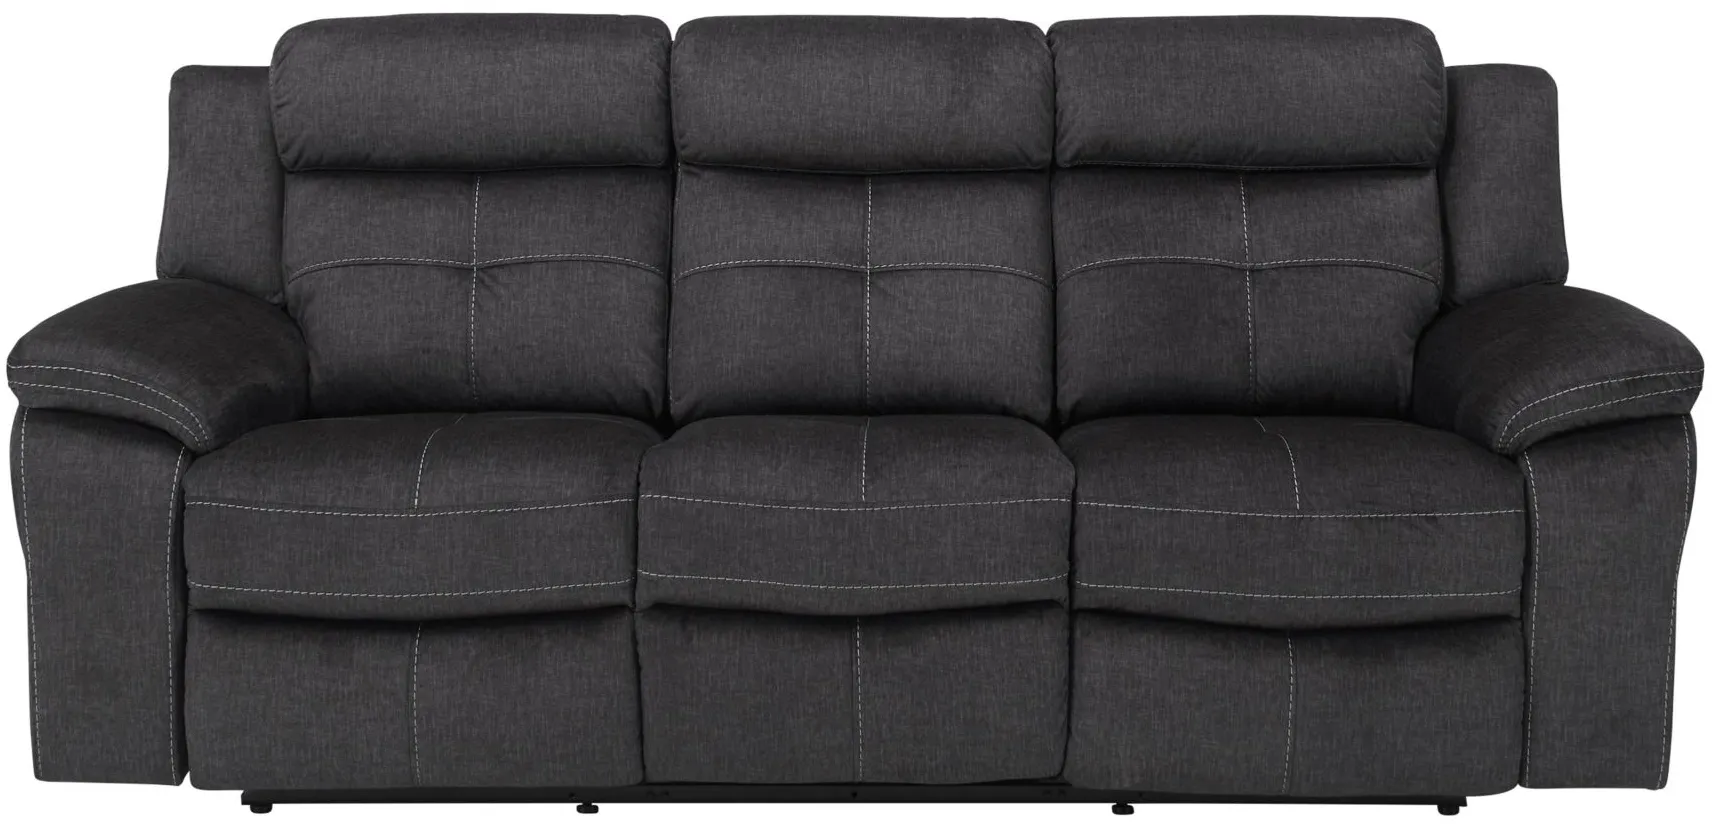 Lugano Microfiber Reclining Sofa in Gray by Bellanest